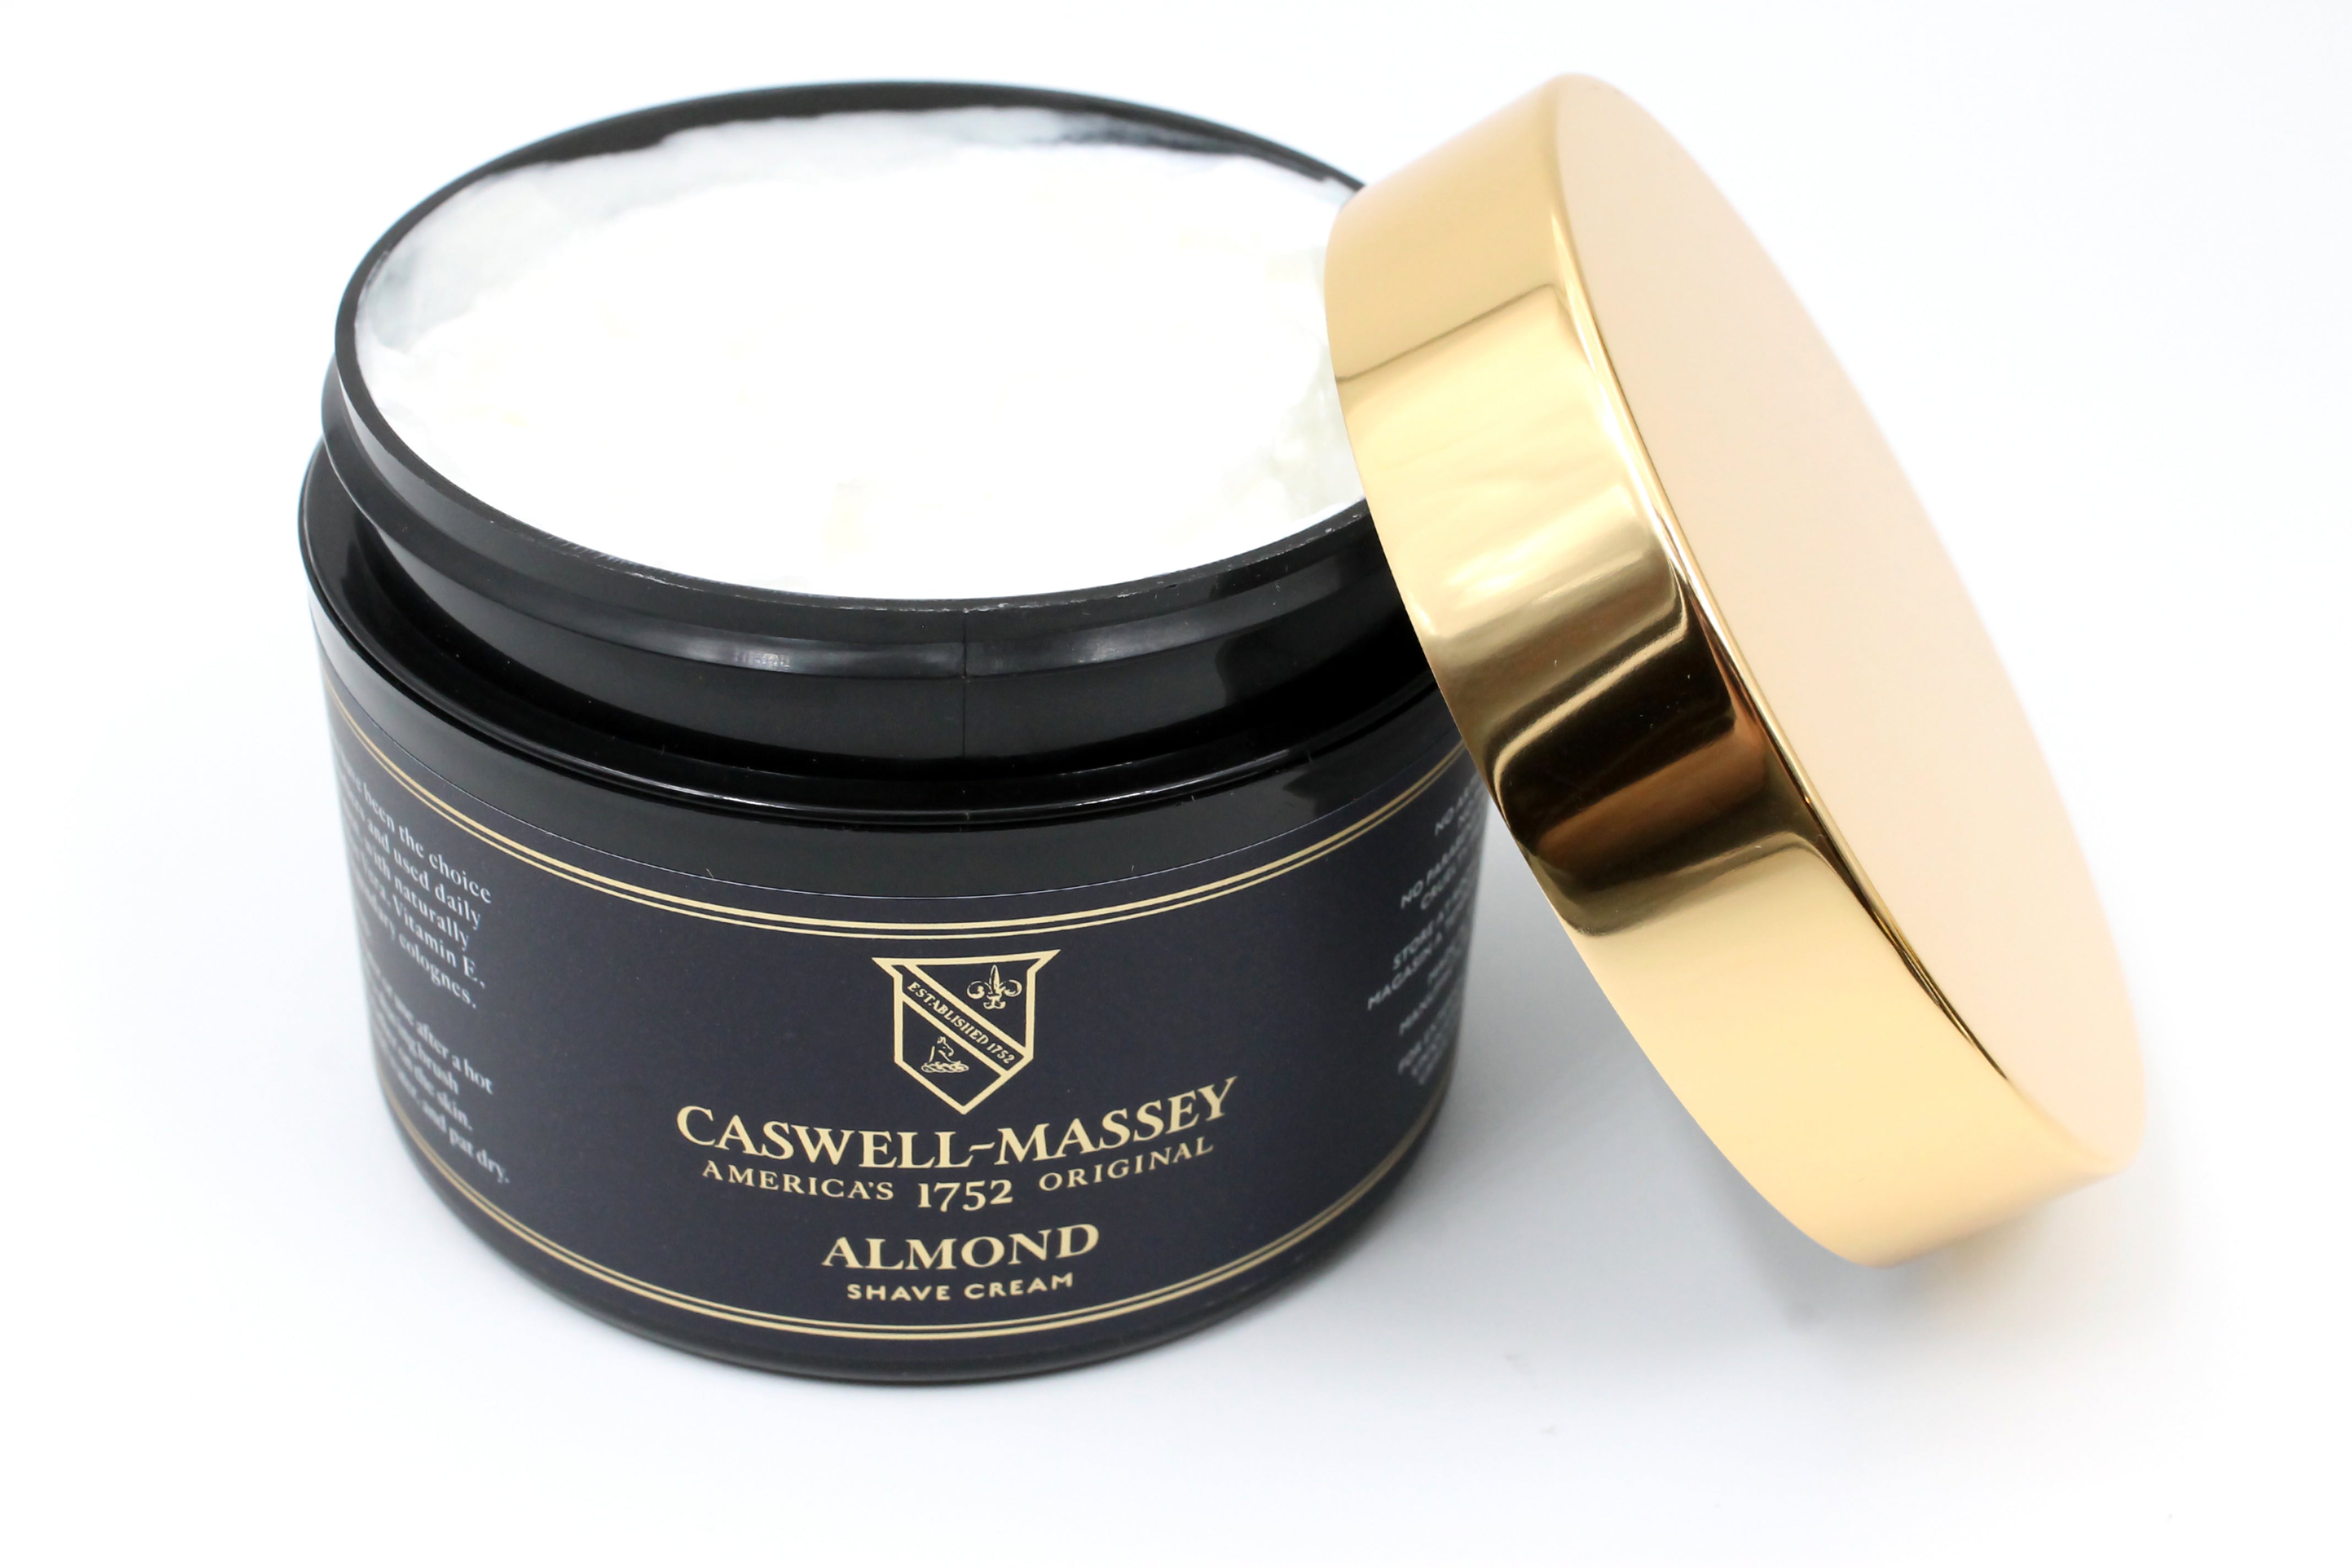 Caswell Massey Almond Luxury Shaving Cream in Jar - 226g (8 oz)